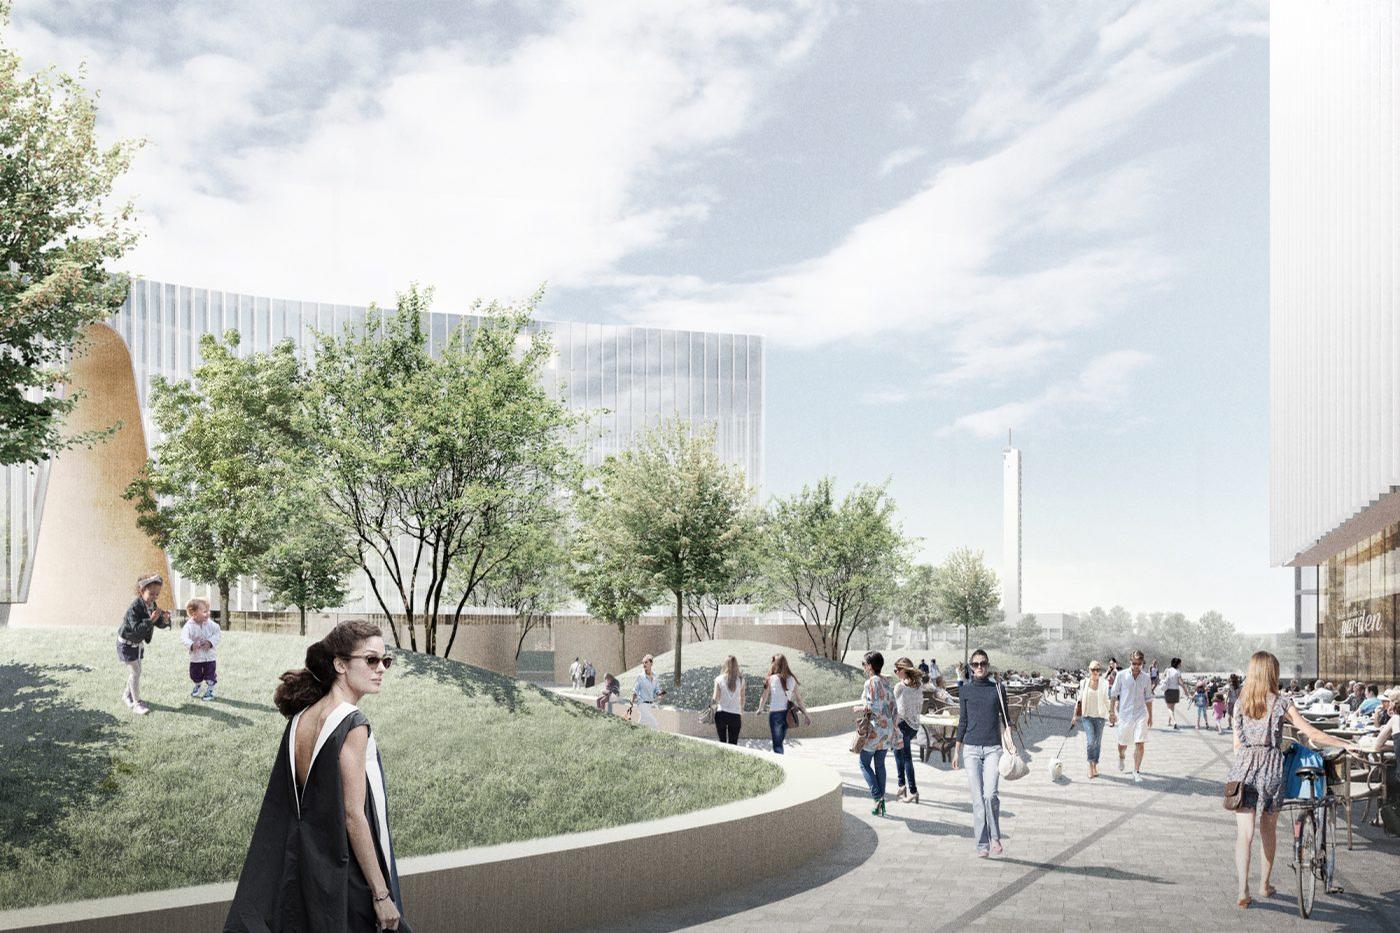 The development will be built next to the decades-old Helsinki Olympic Stadium. / Courtesy of Garden Helsinki